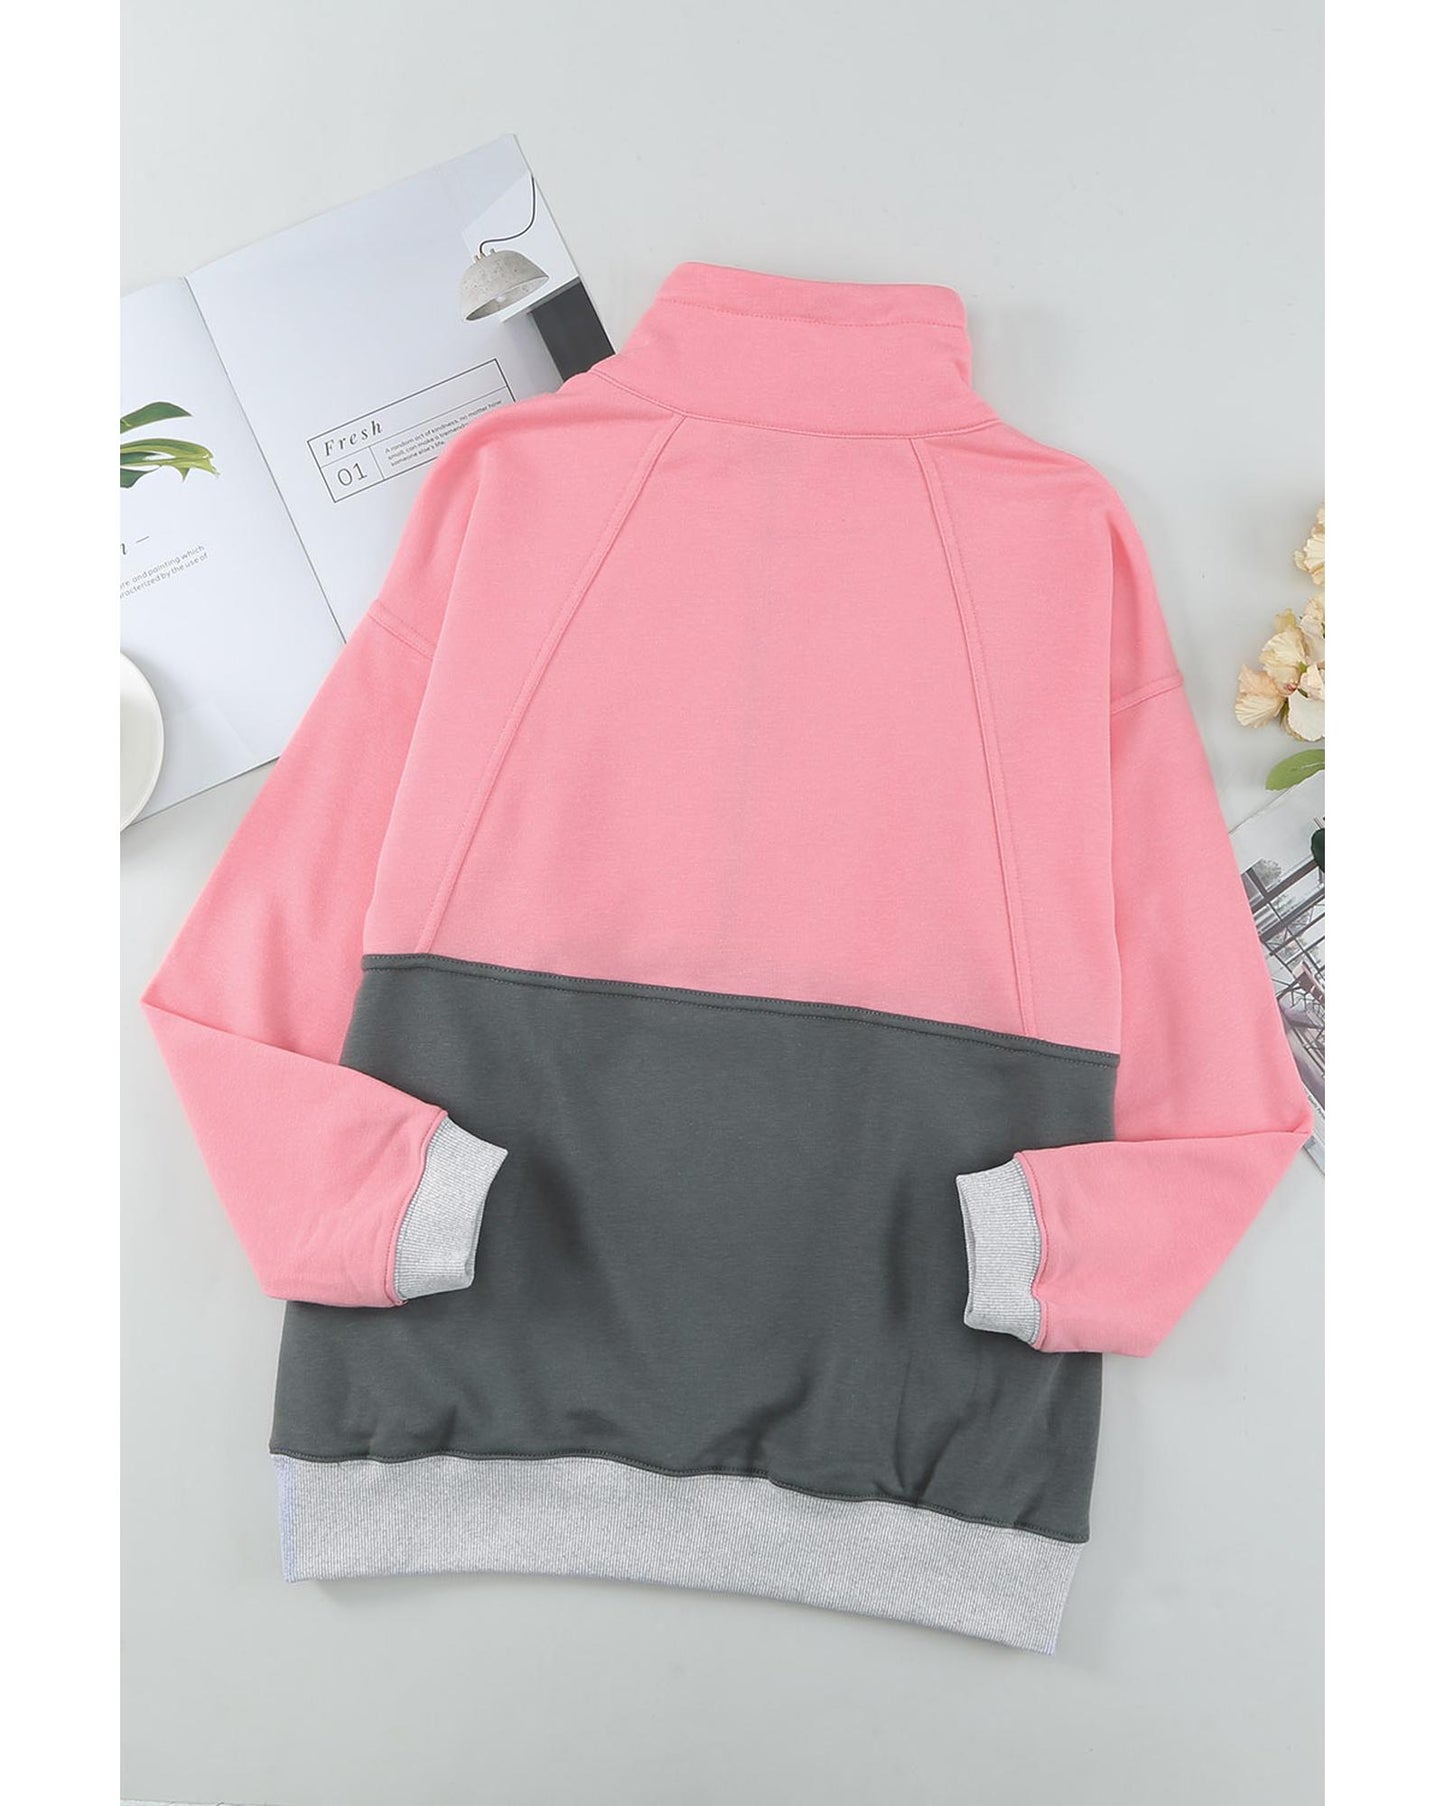 Azura Exchange Zipped Colorblock Sweatshirt with Pockets - S